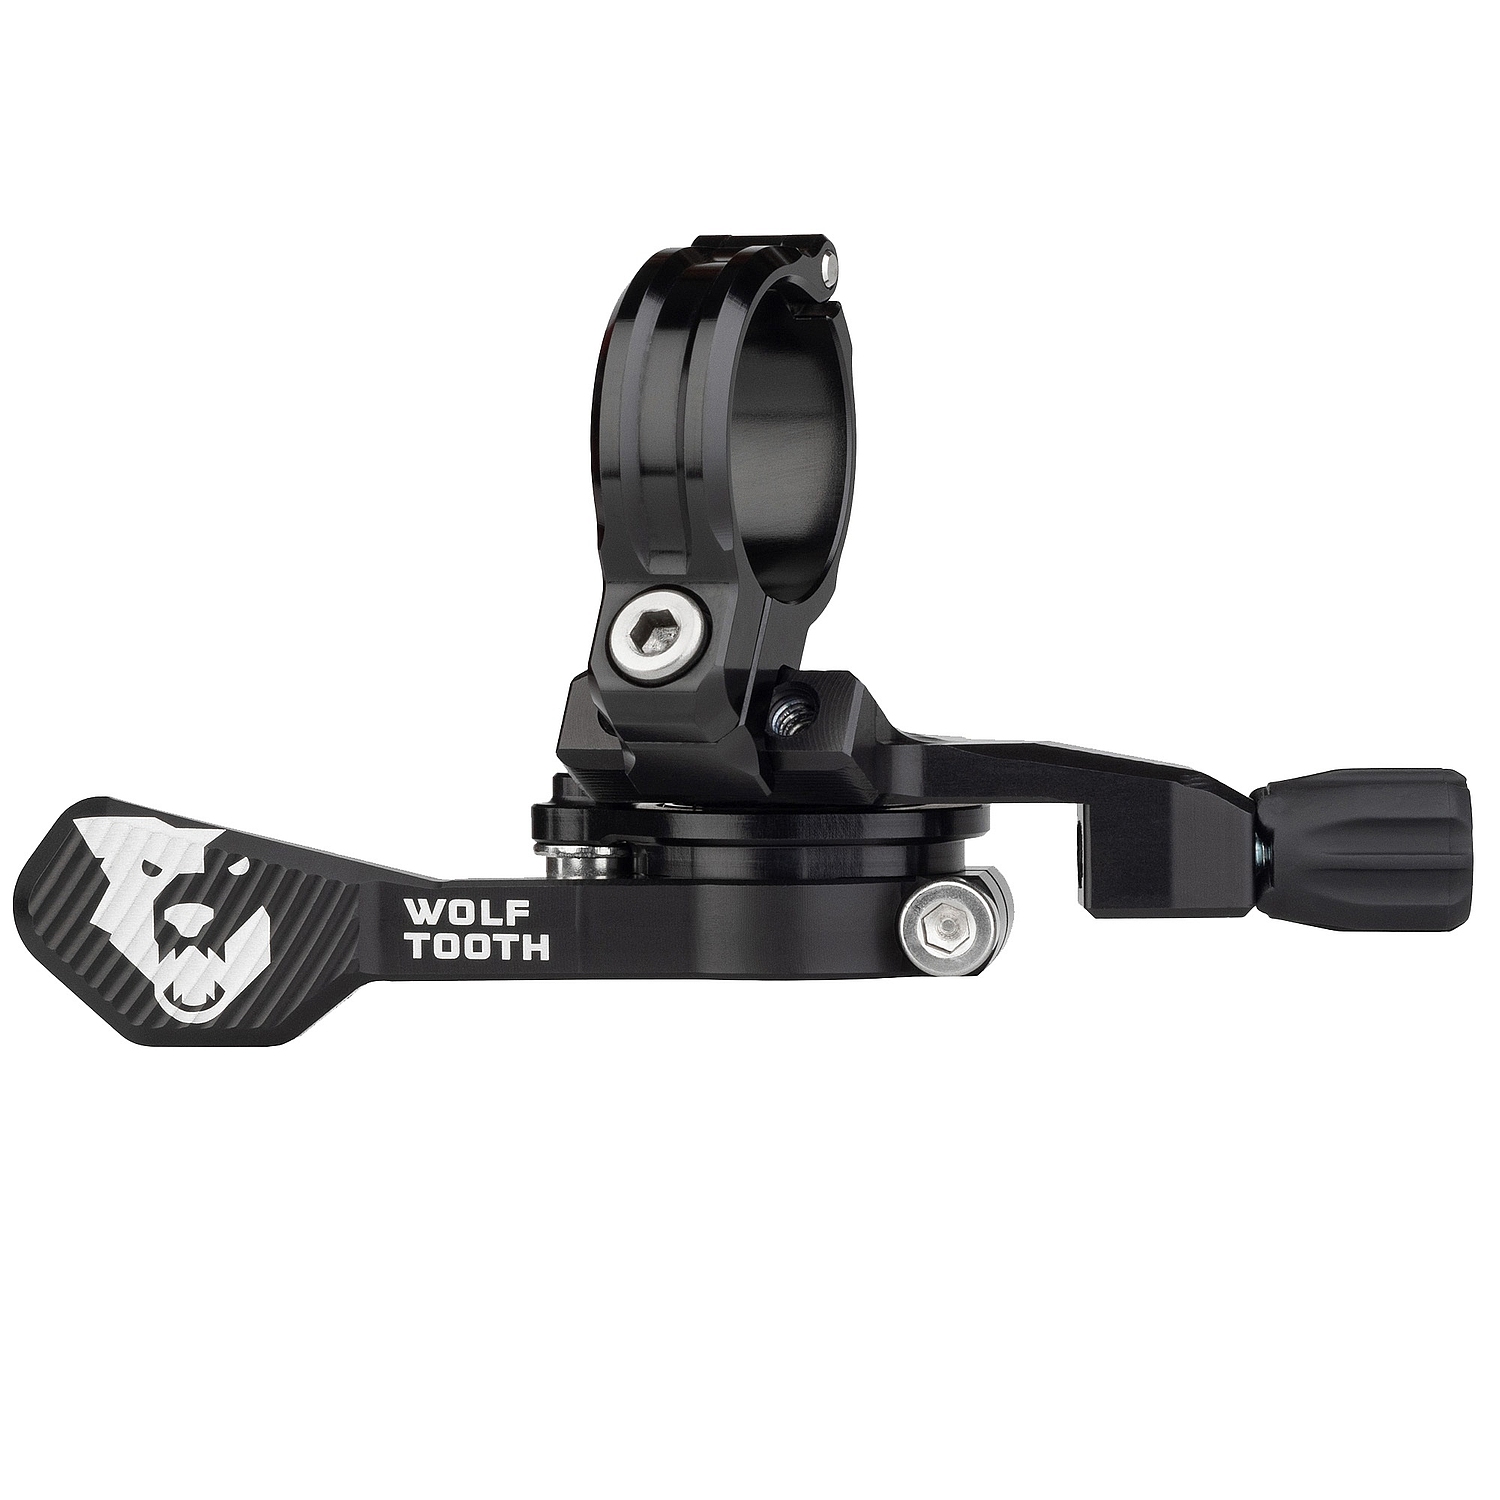 Productfoto van Wolf Tooth ReMote Pro - Remote Hendel met 22,2 mm Stuurklem - zwart